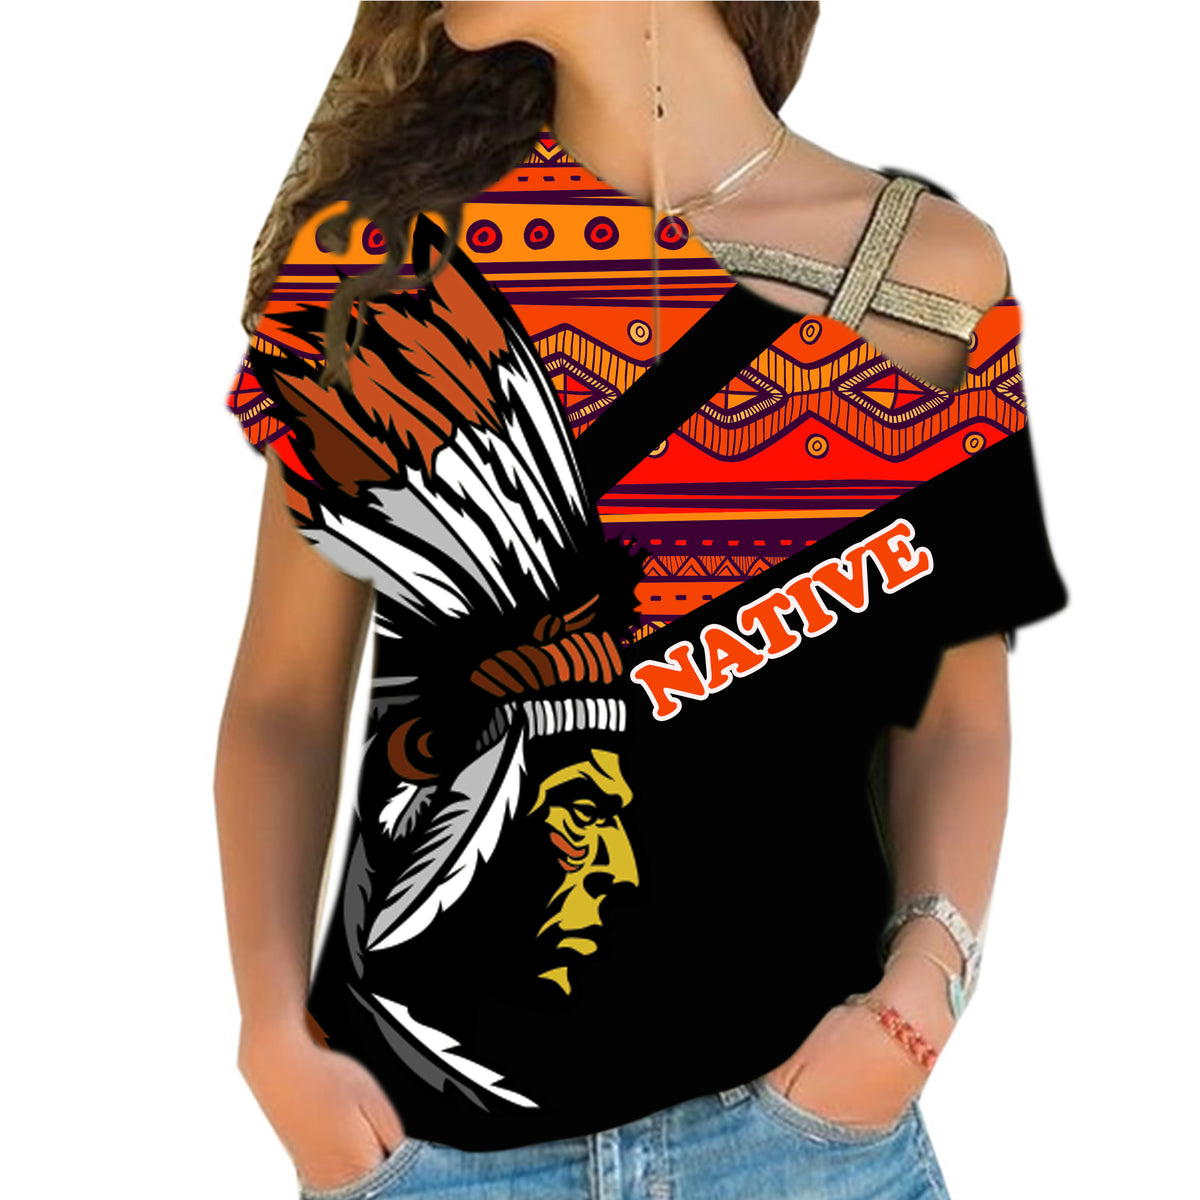 Powwow StoreCRS0001219 Native American Cross Shoulder Shirt